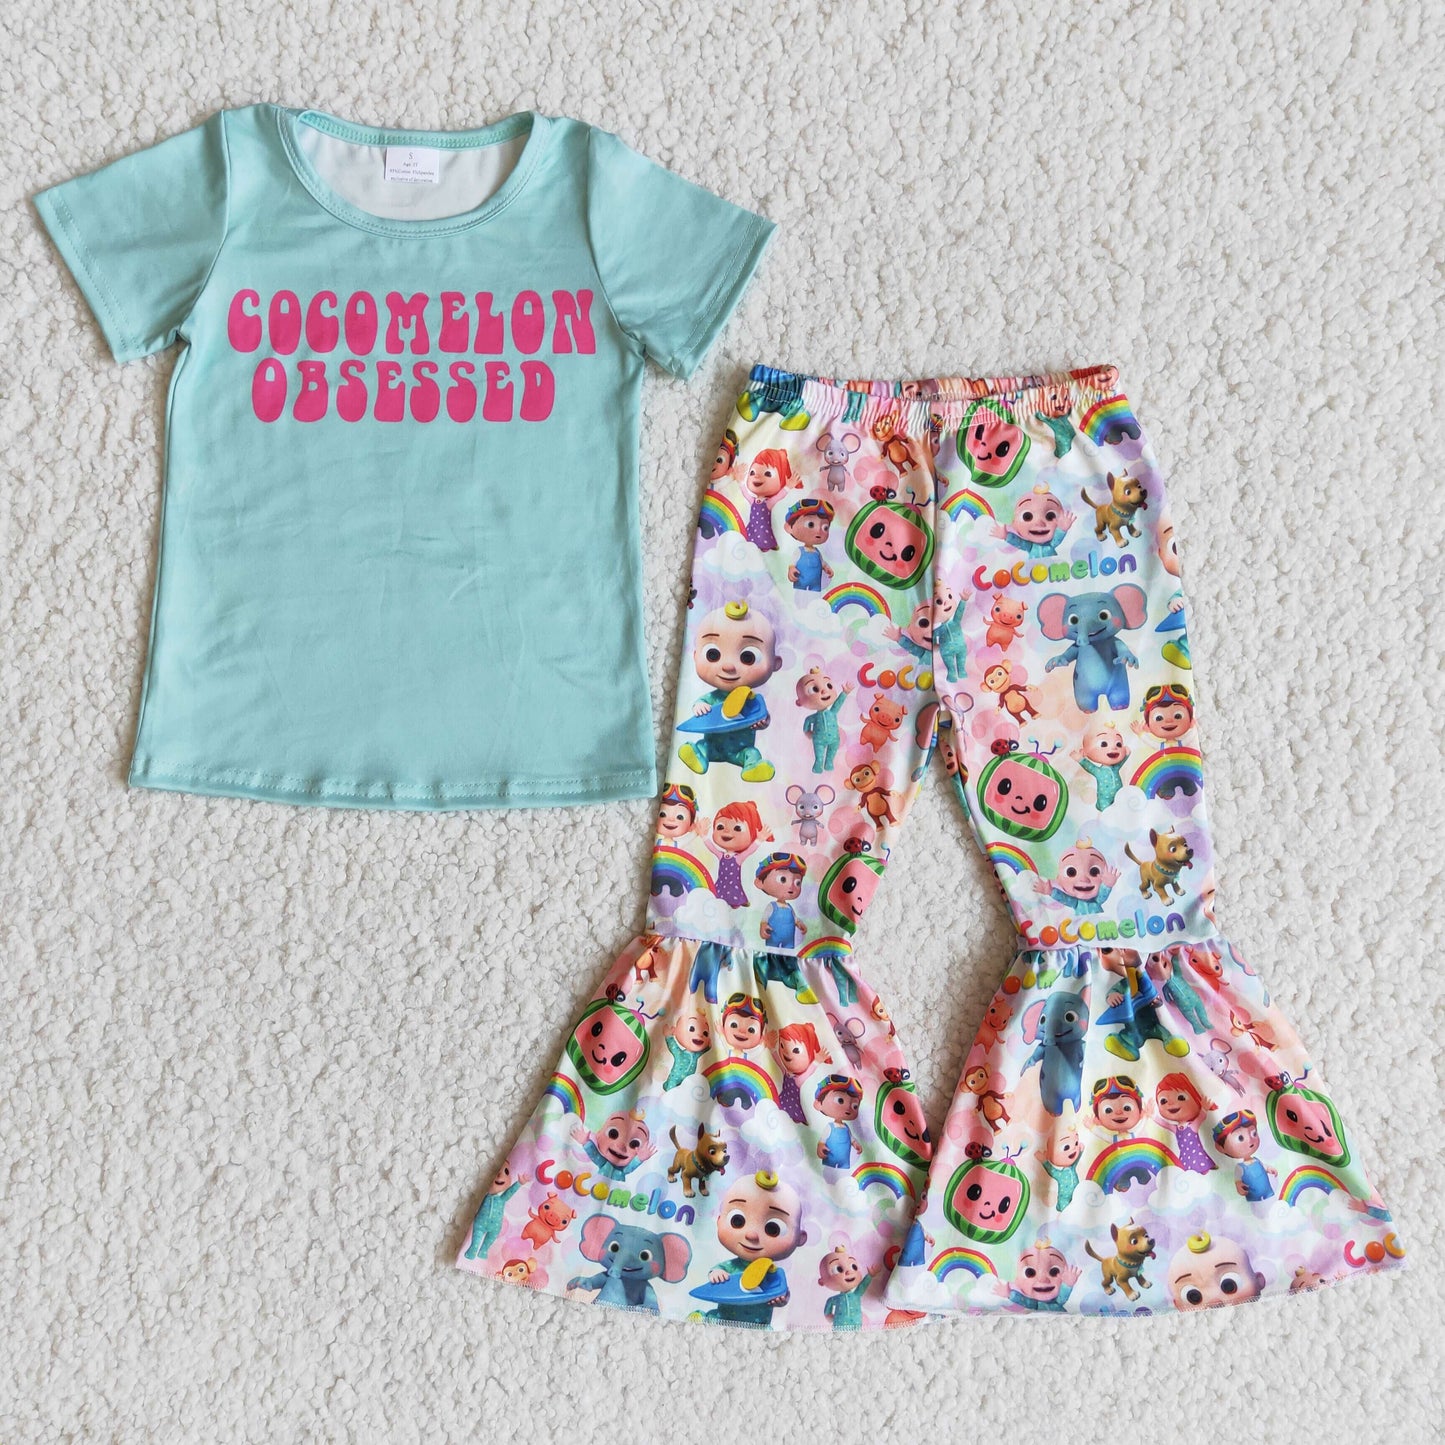 Obsessed short sleeve shirt melon pants toddler girls clothing set